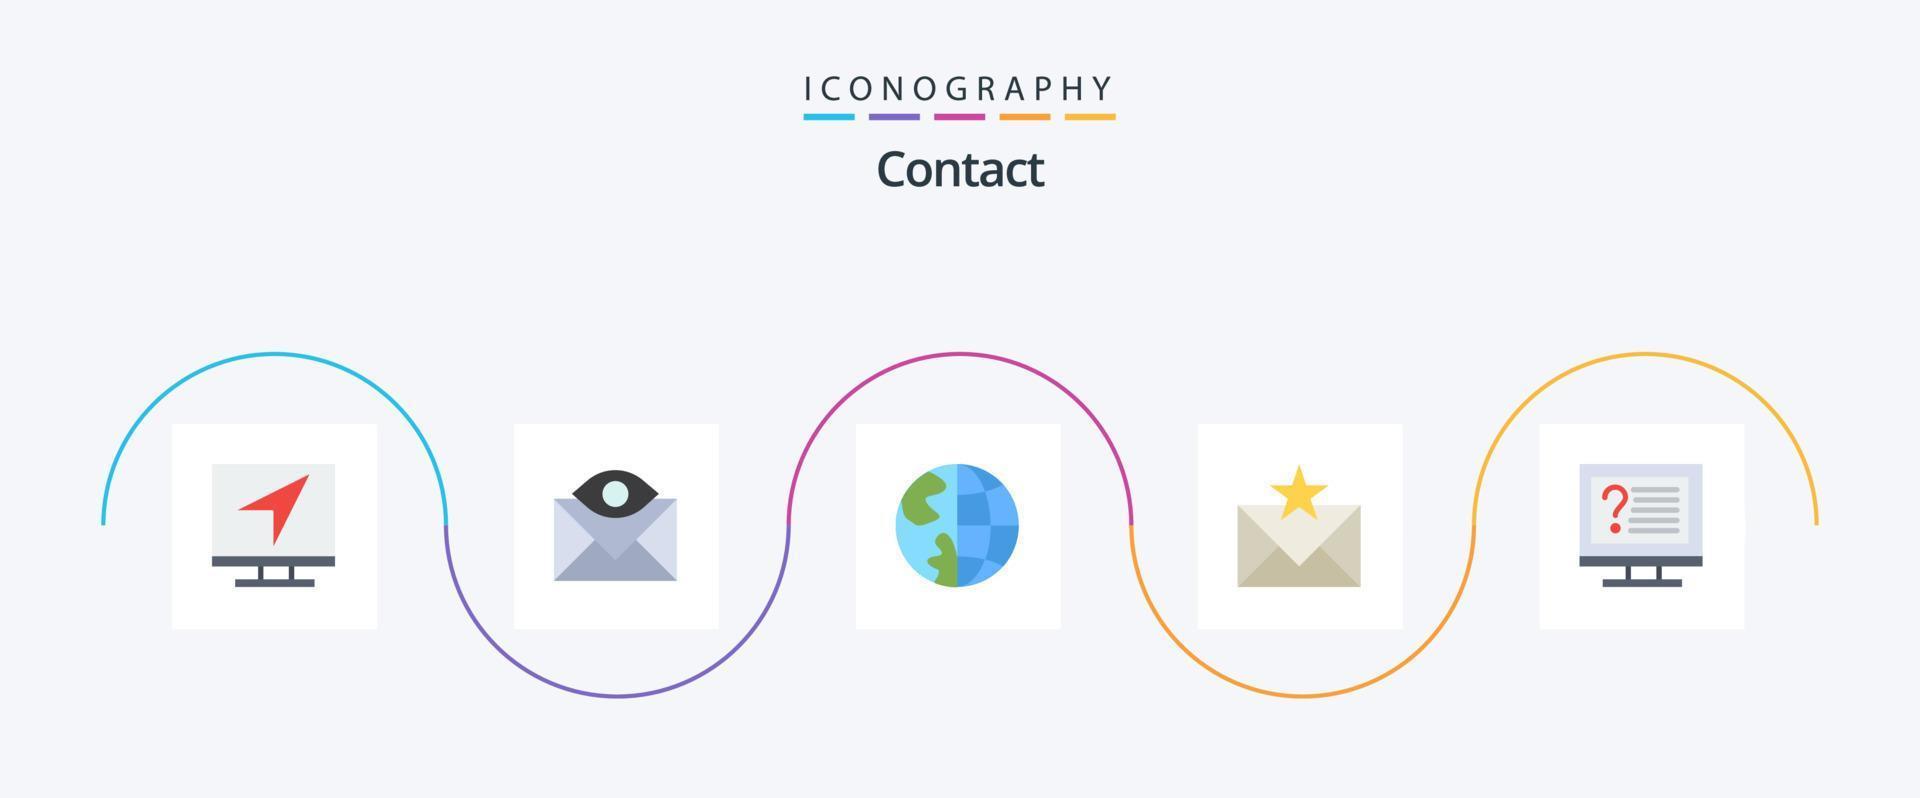 contact vlak 5 icoon pak inclusief envelop. communicatie. e-mail. wereldbol. contact ons vector